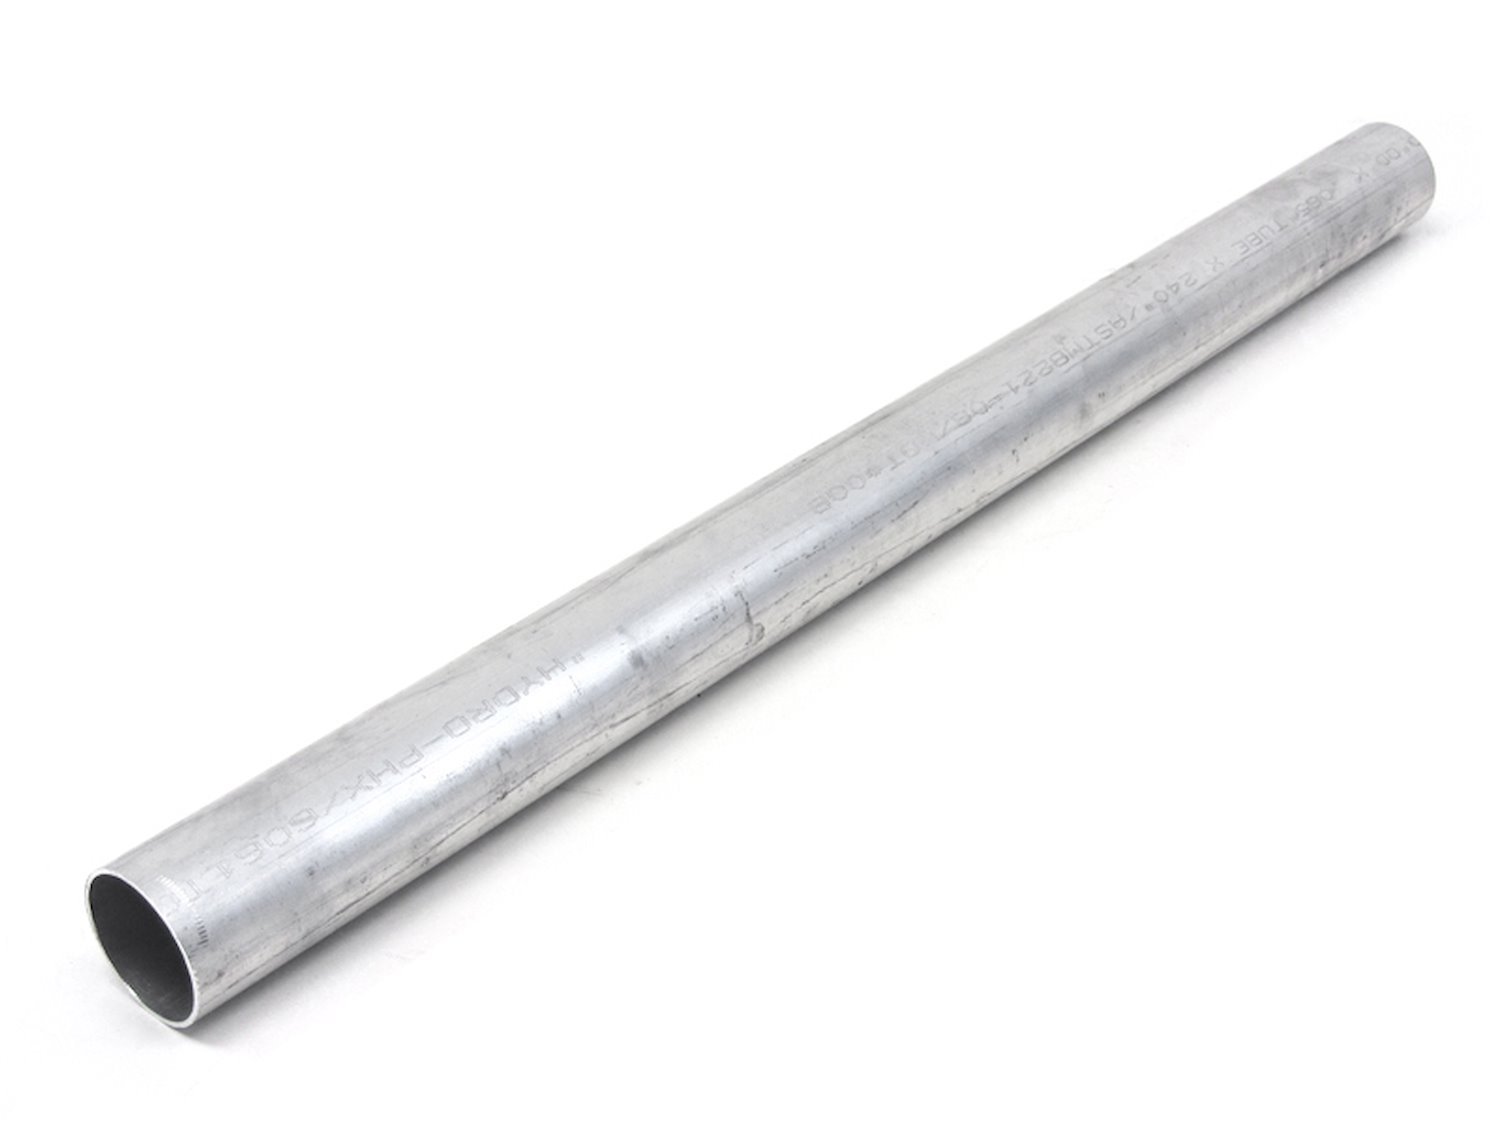 AST-3F-025 Aluminum Tubing, 6061 Aluminum, Straight Tubing, 1/4 in. OD, Seamless, Raw Finish, 3 ft. Long